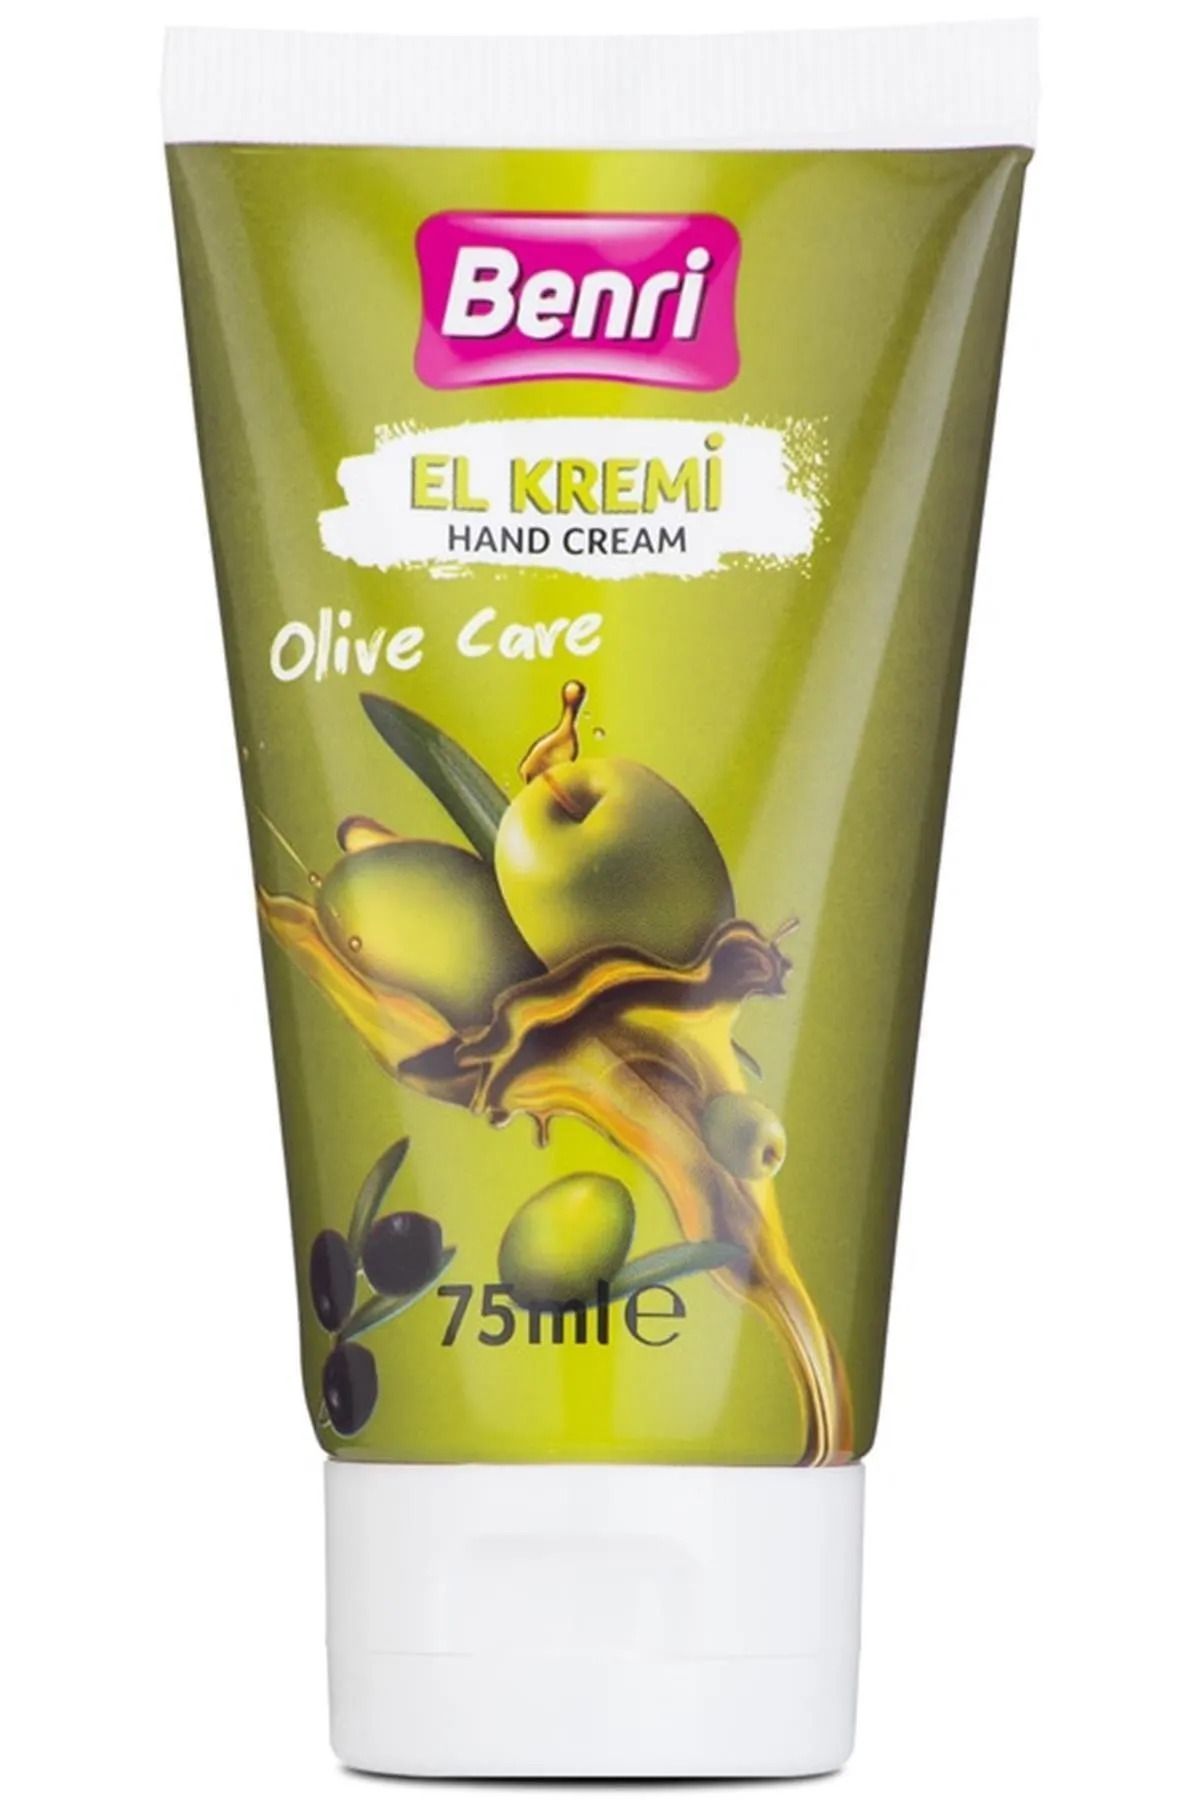 Benri Olive Care El Kremi 75 ml Kategori: El Kremi